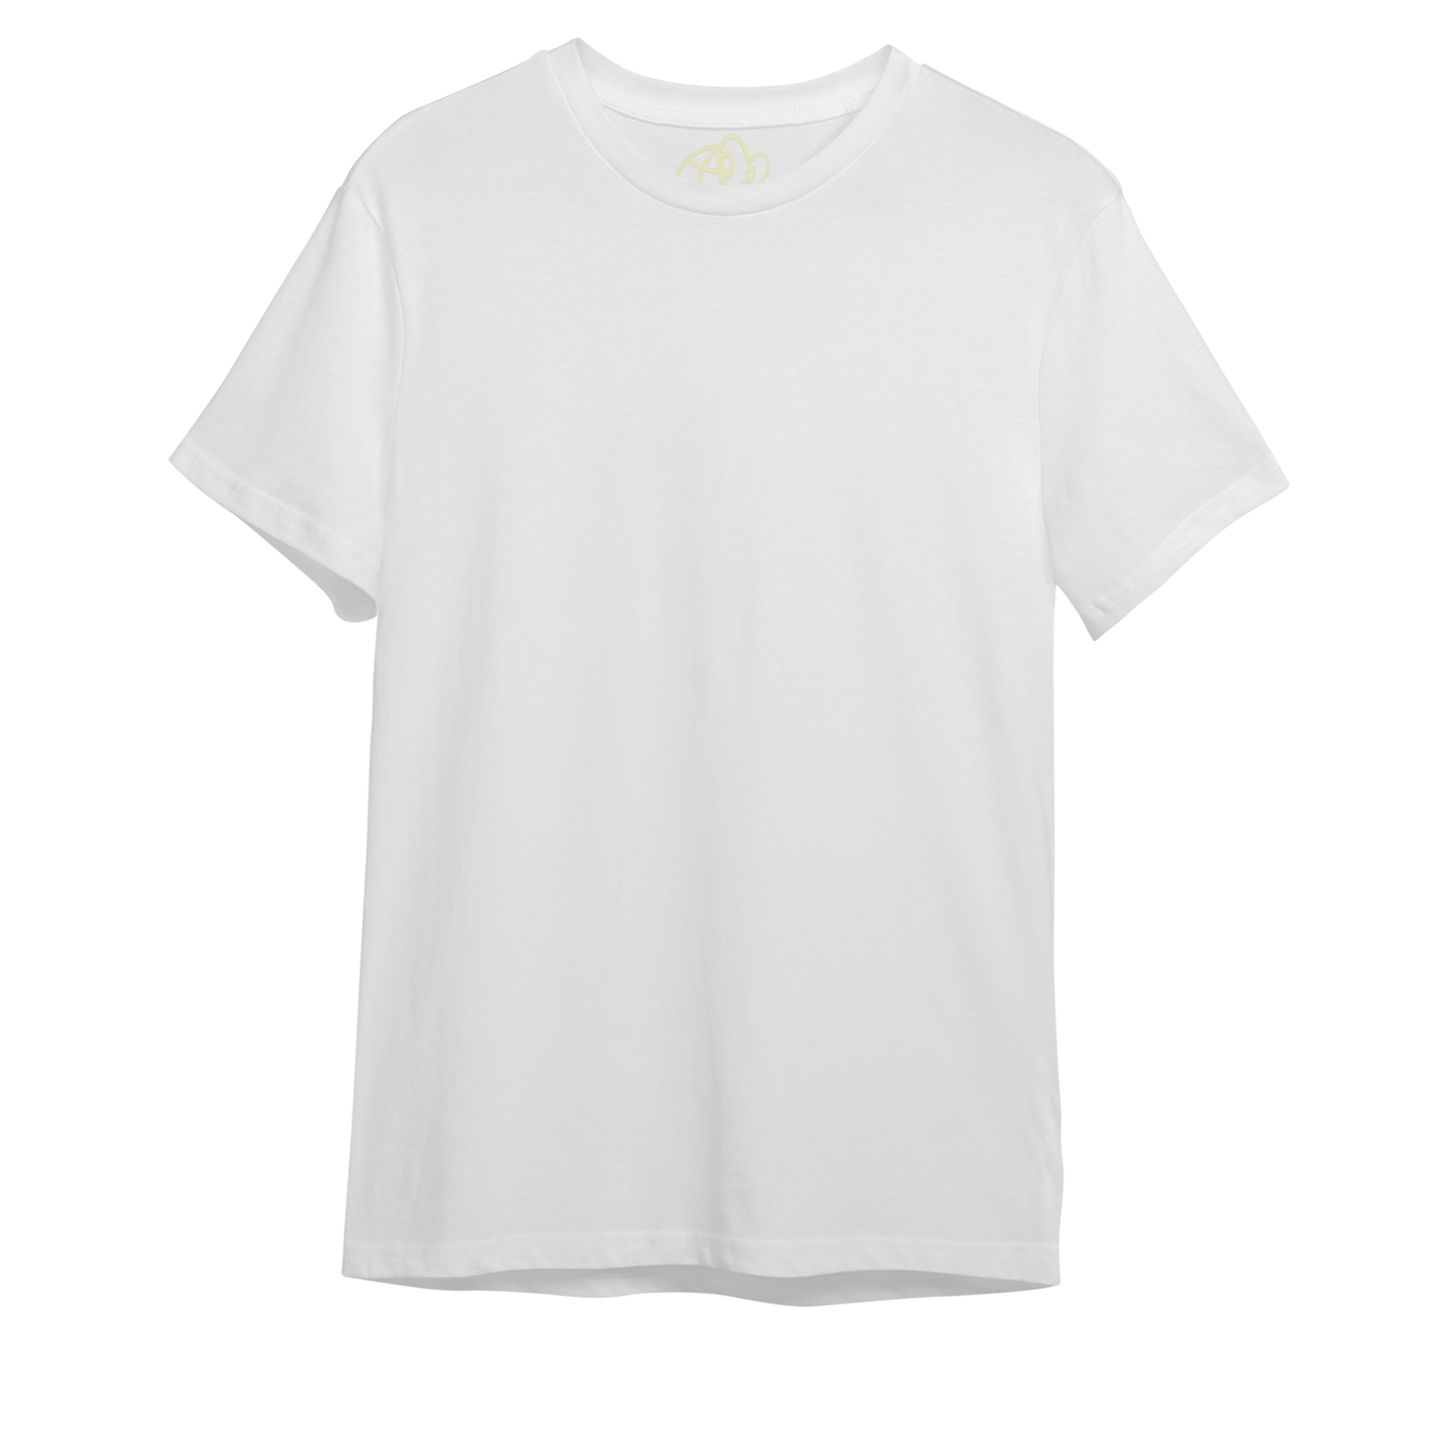 White Blank Shirt